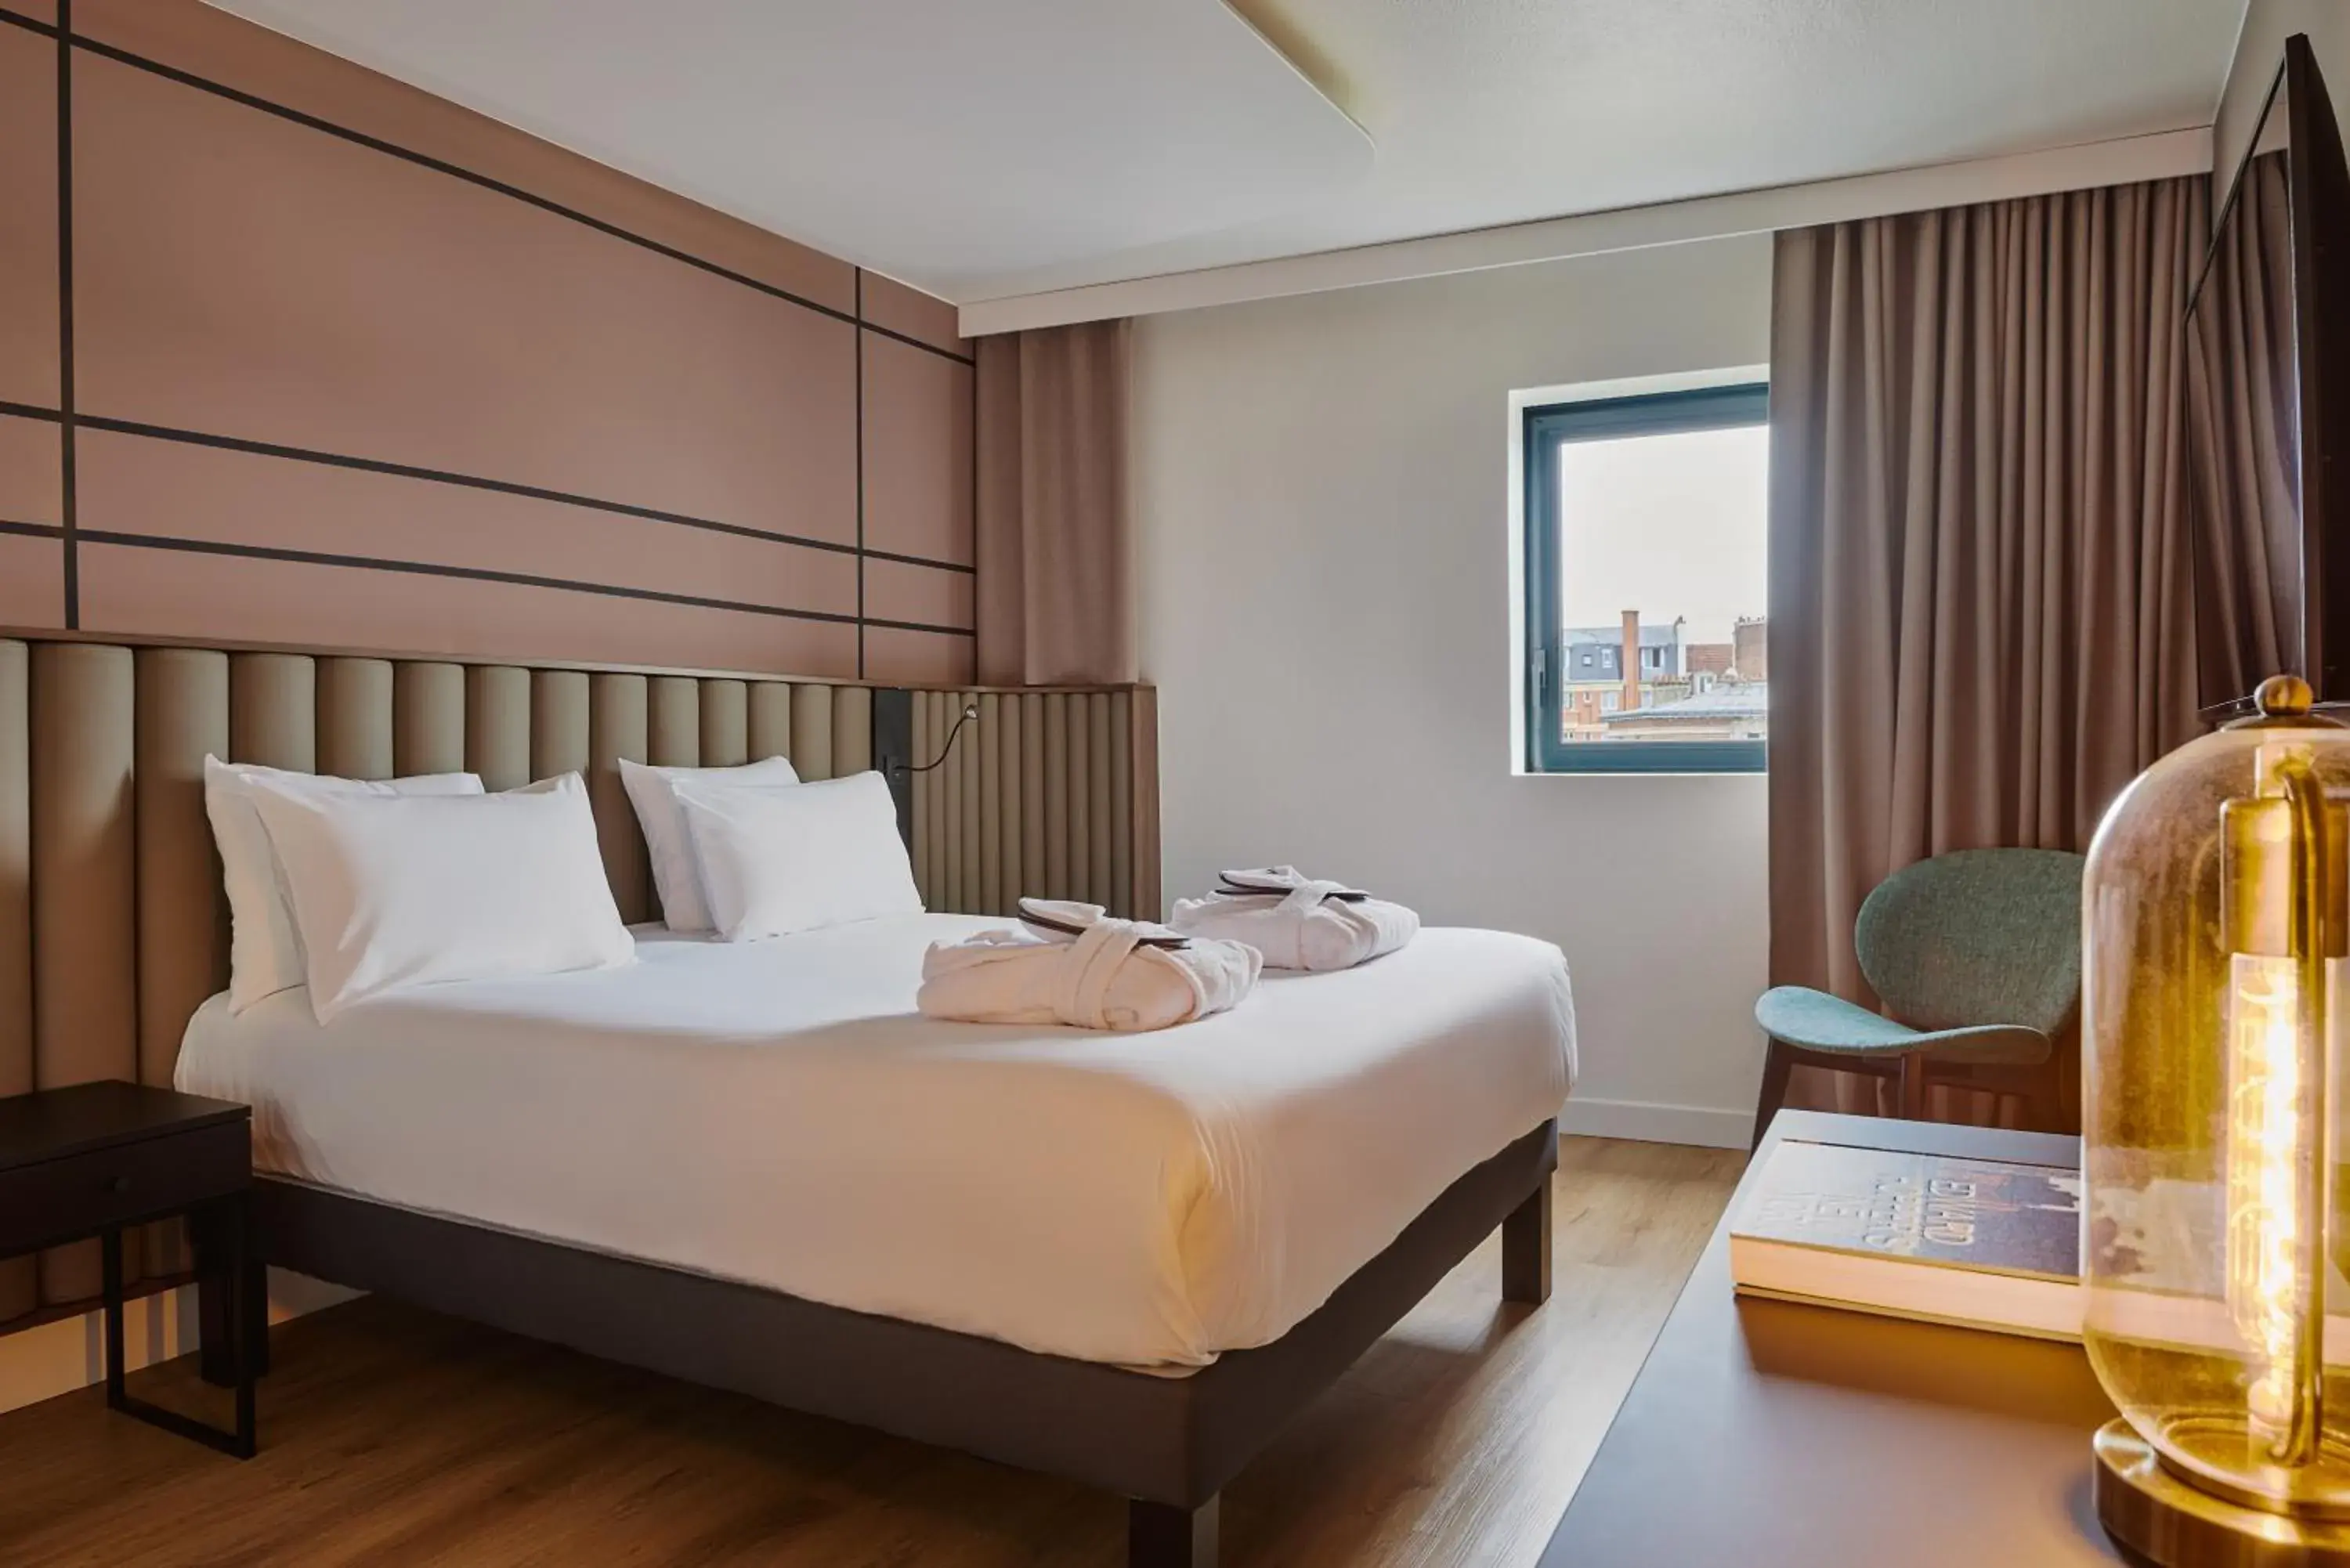 Photo of the whole room, Bed in Qualys - Hotel Nanterre - Paris la DÃ©fense